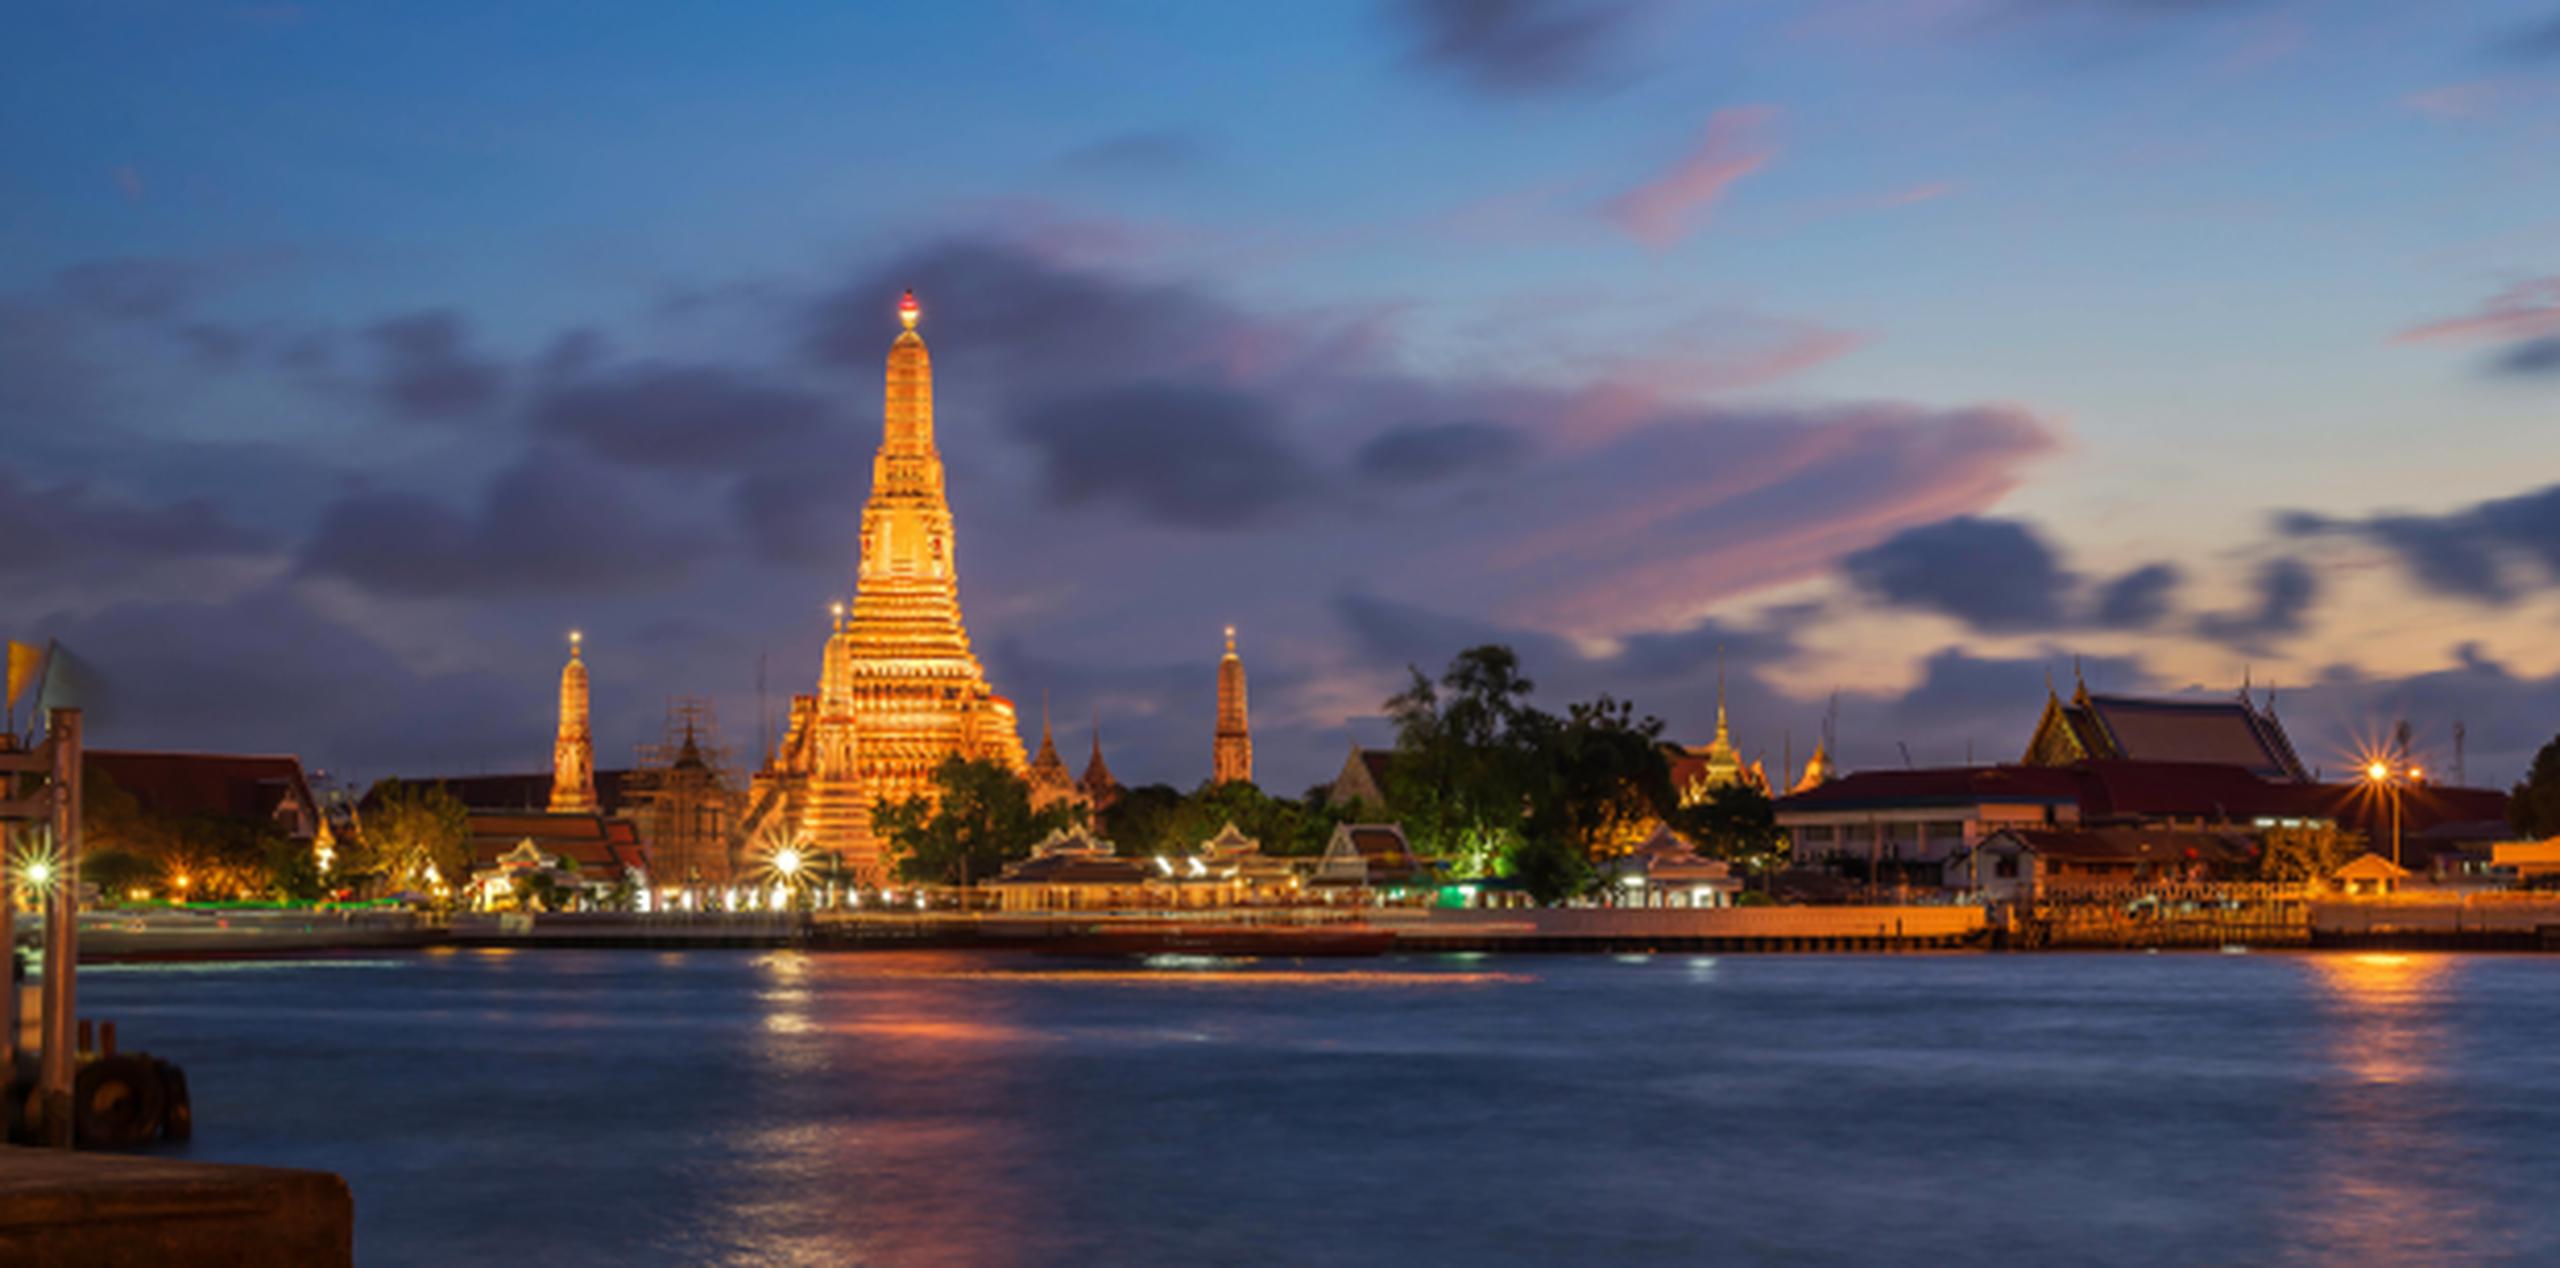 El templo Wat Arun en Bangkok, Tailandia. (Shutterstock)